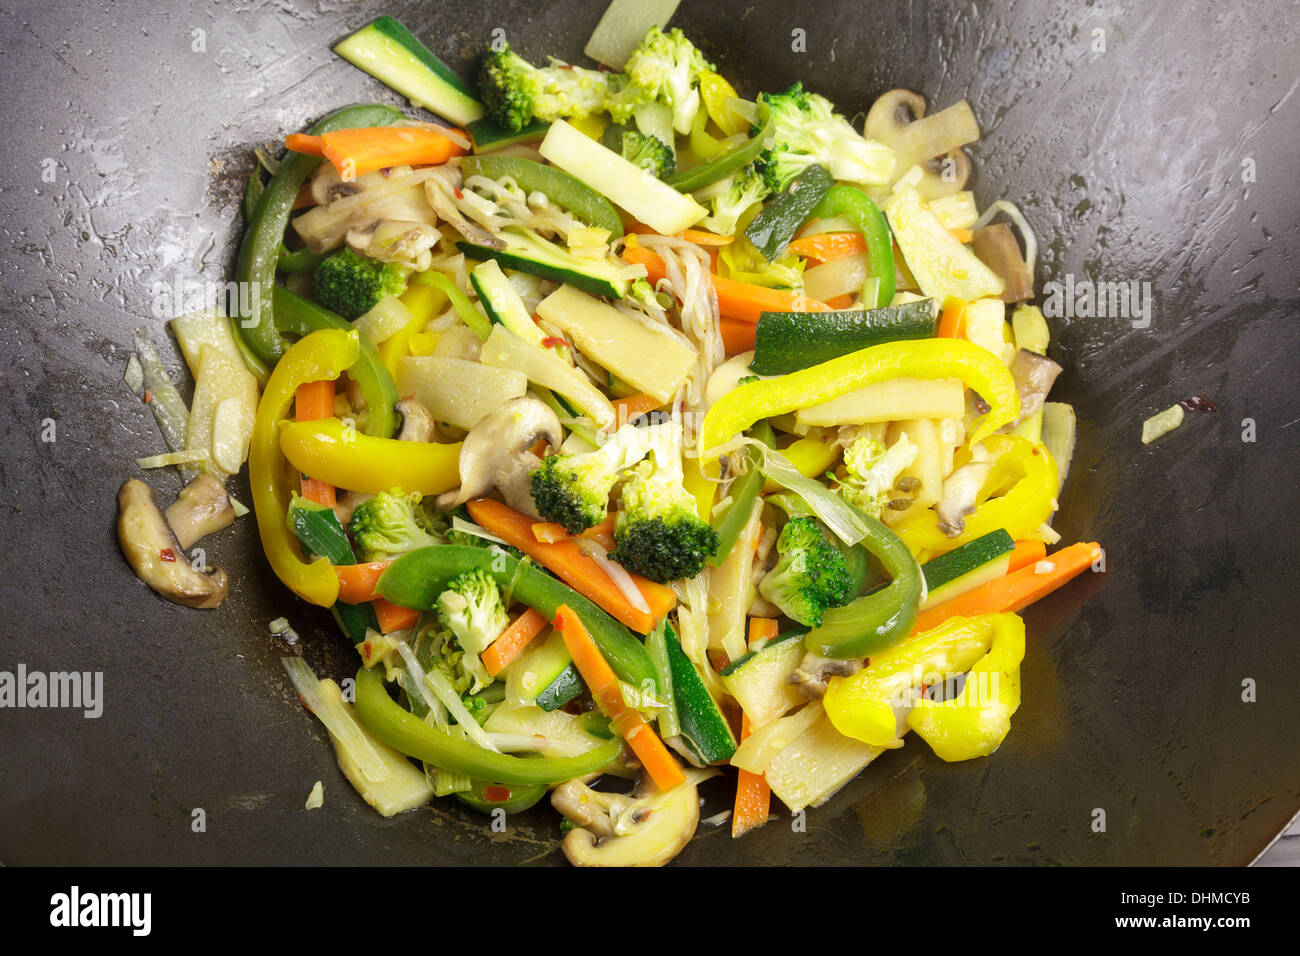 vegetable stir fry Stock Photo